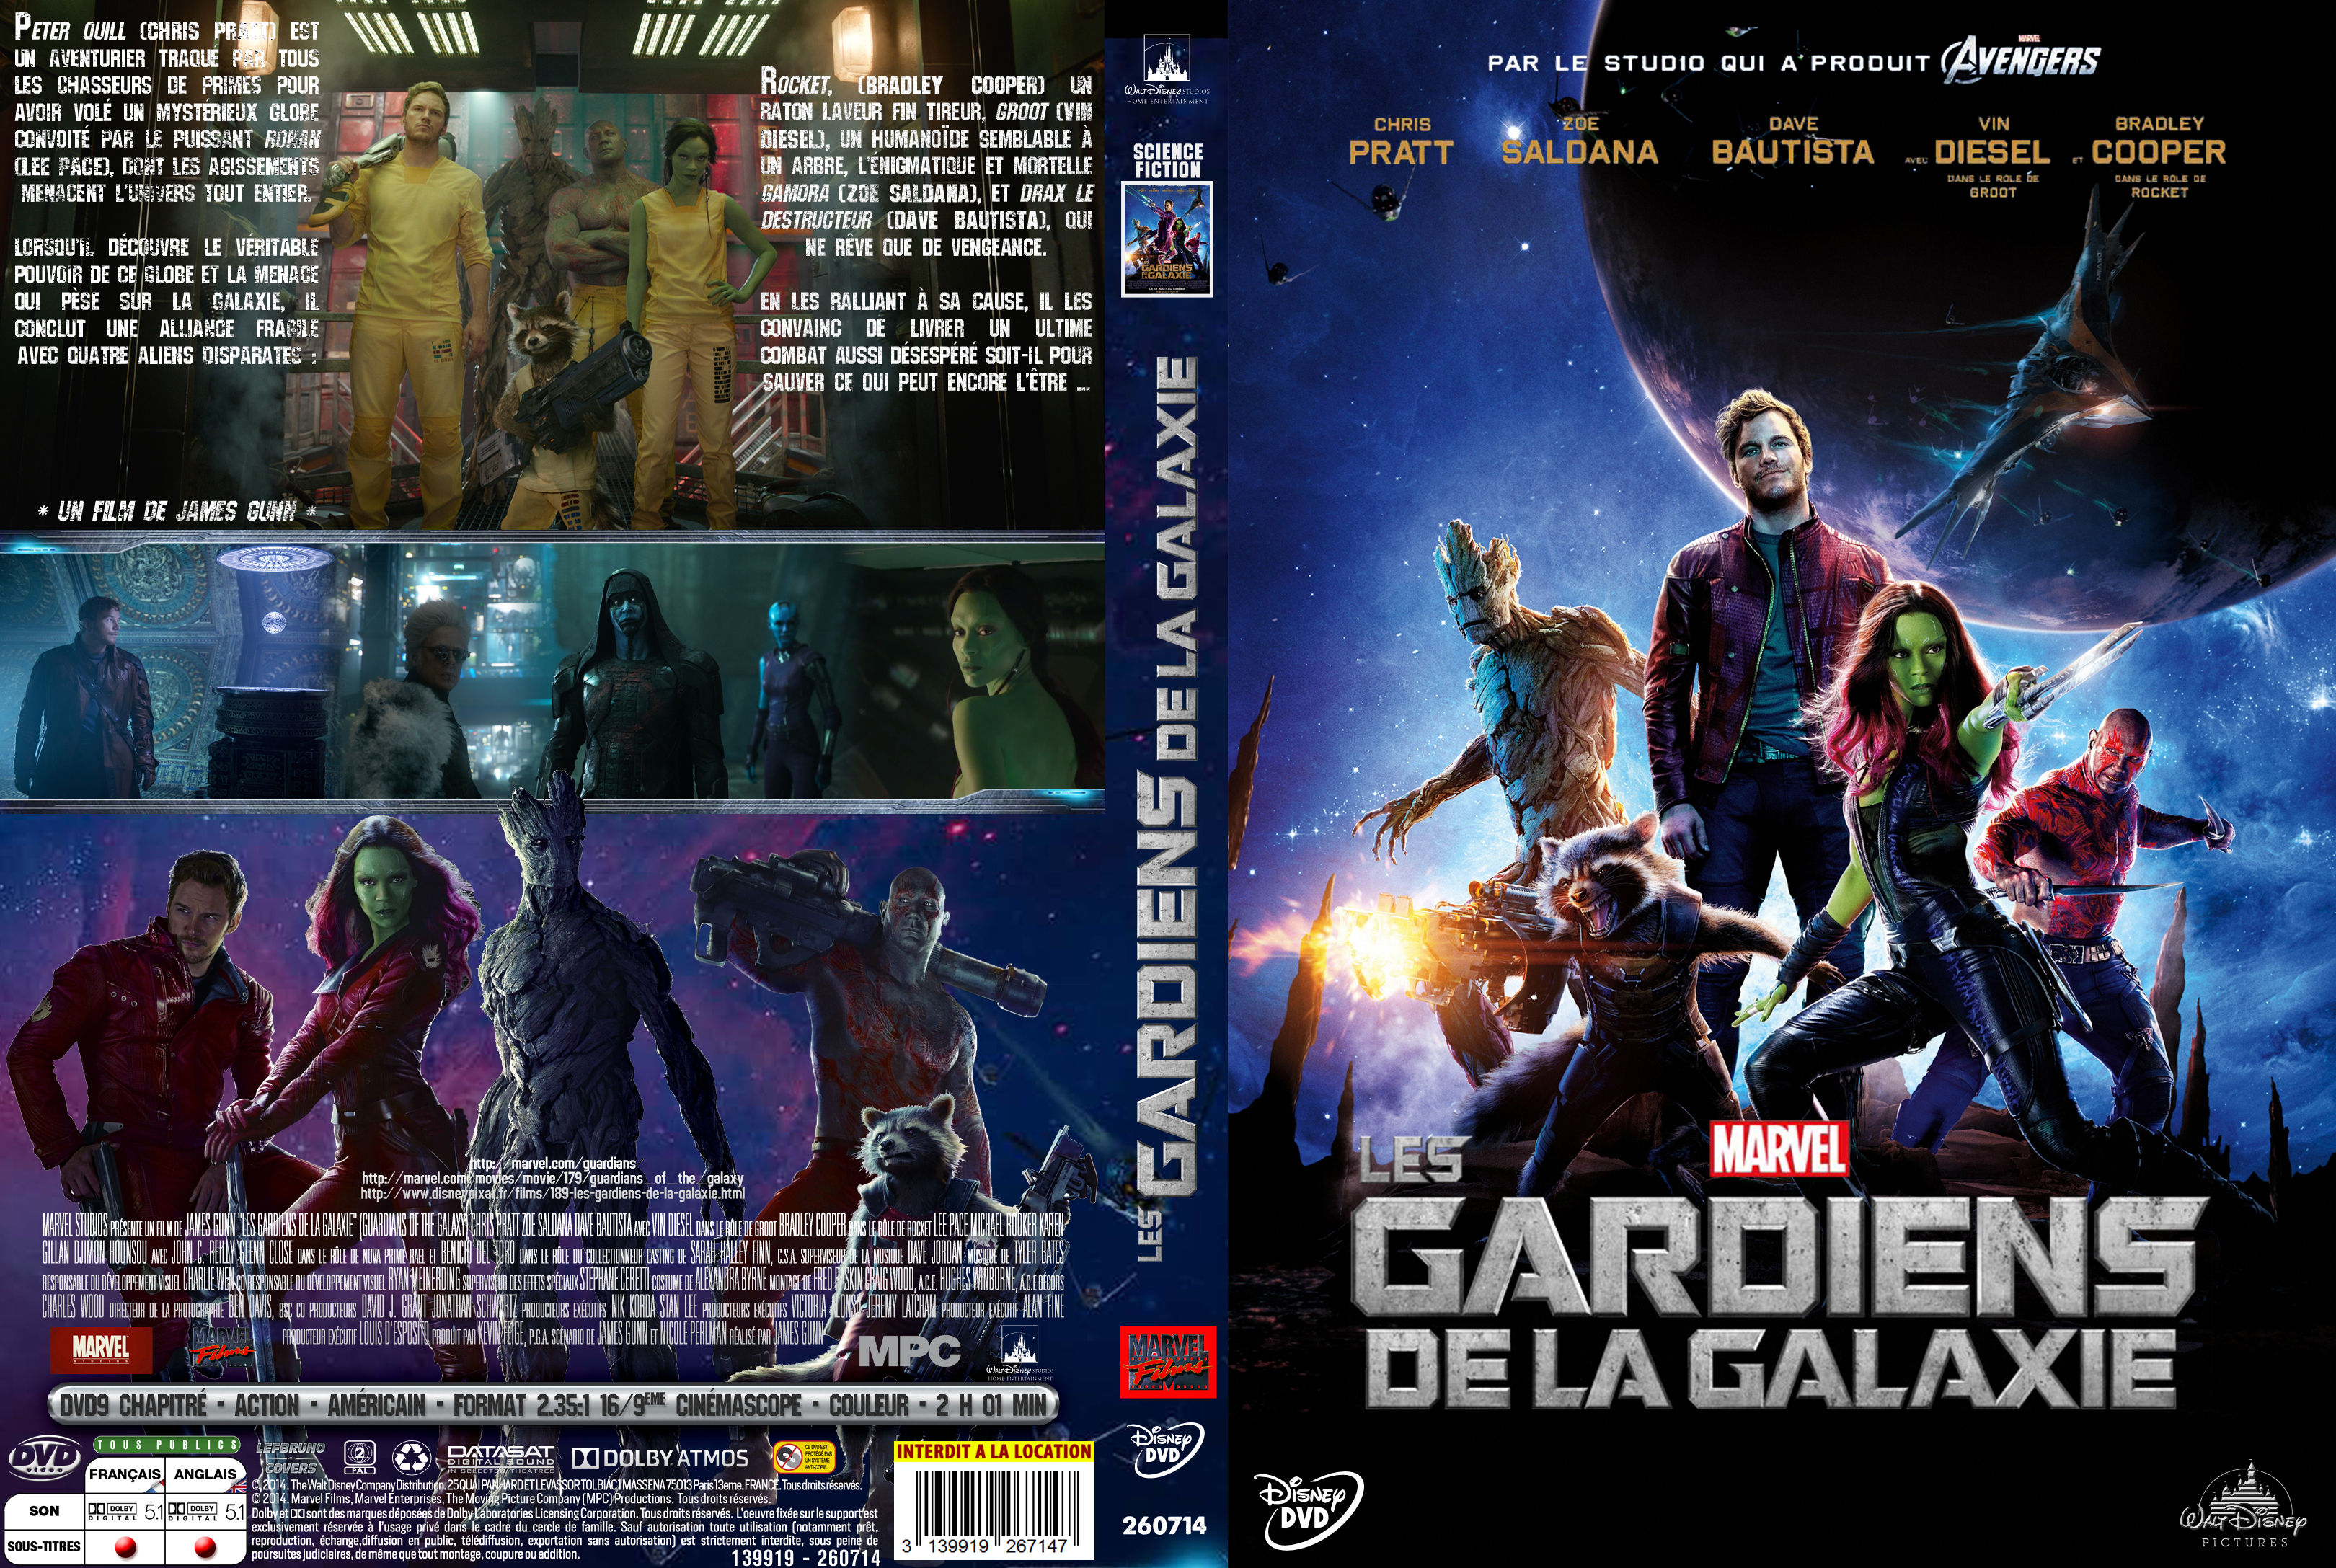 Jaquette DVD Les gardiens de la galaxie custom